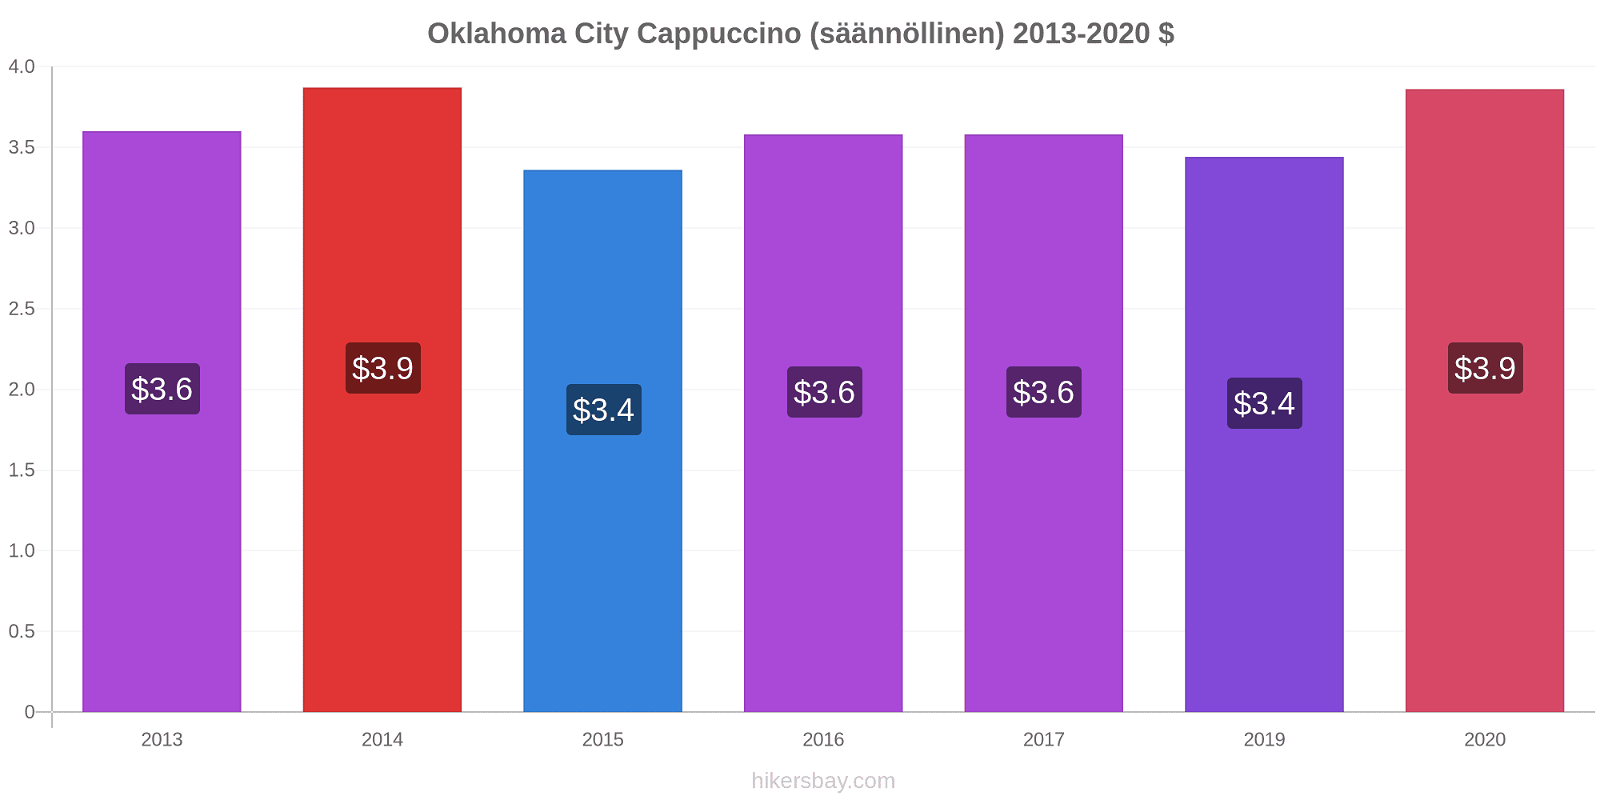 Oklahoma City hintojen muutokset Cappuccino (säännöllinen) hikersbay.com